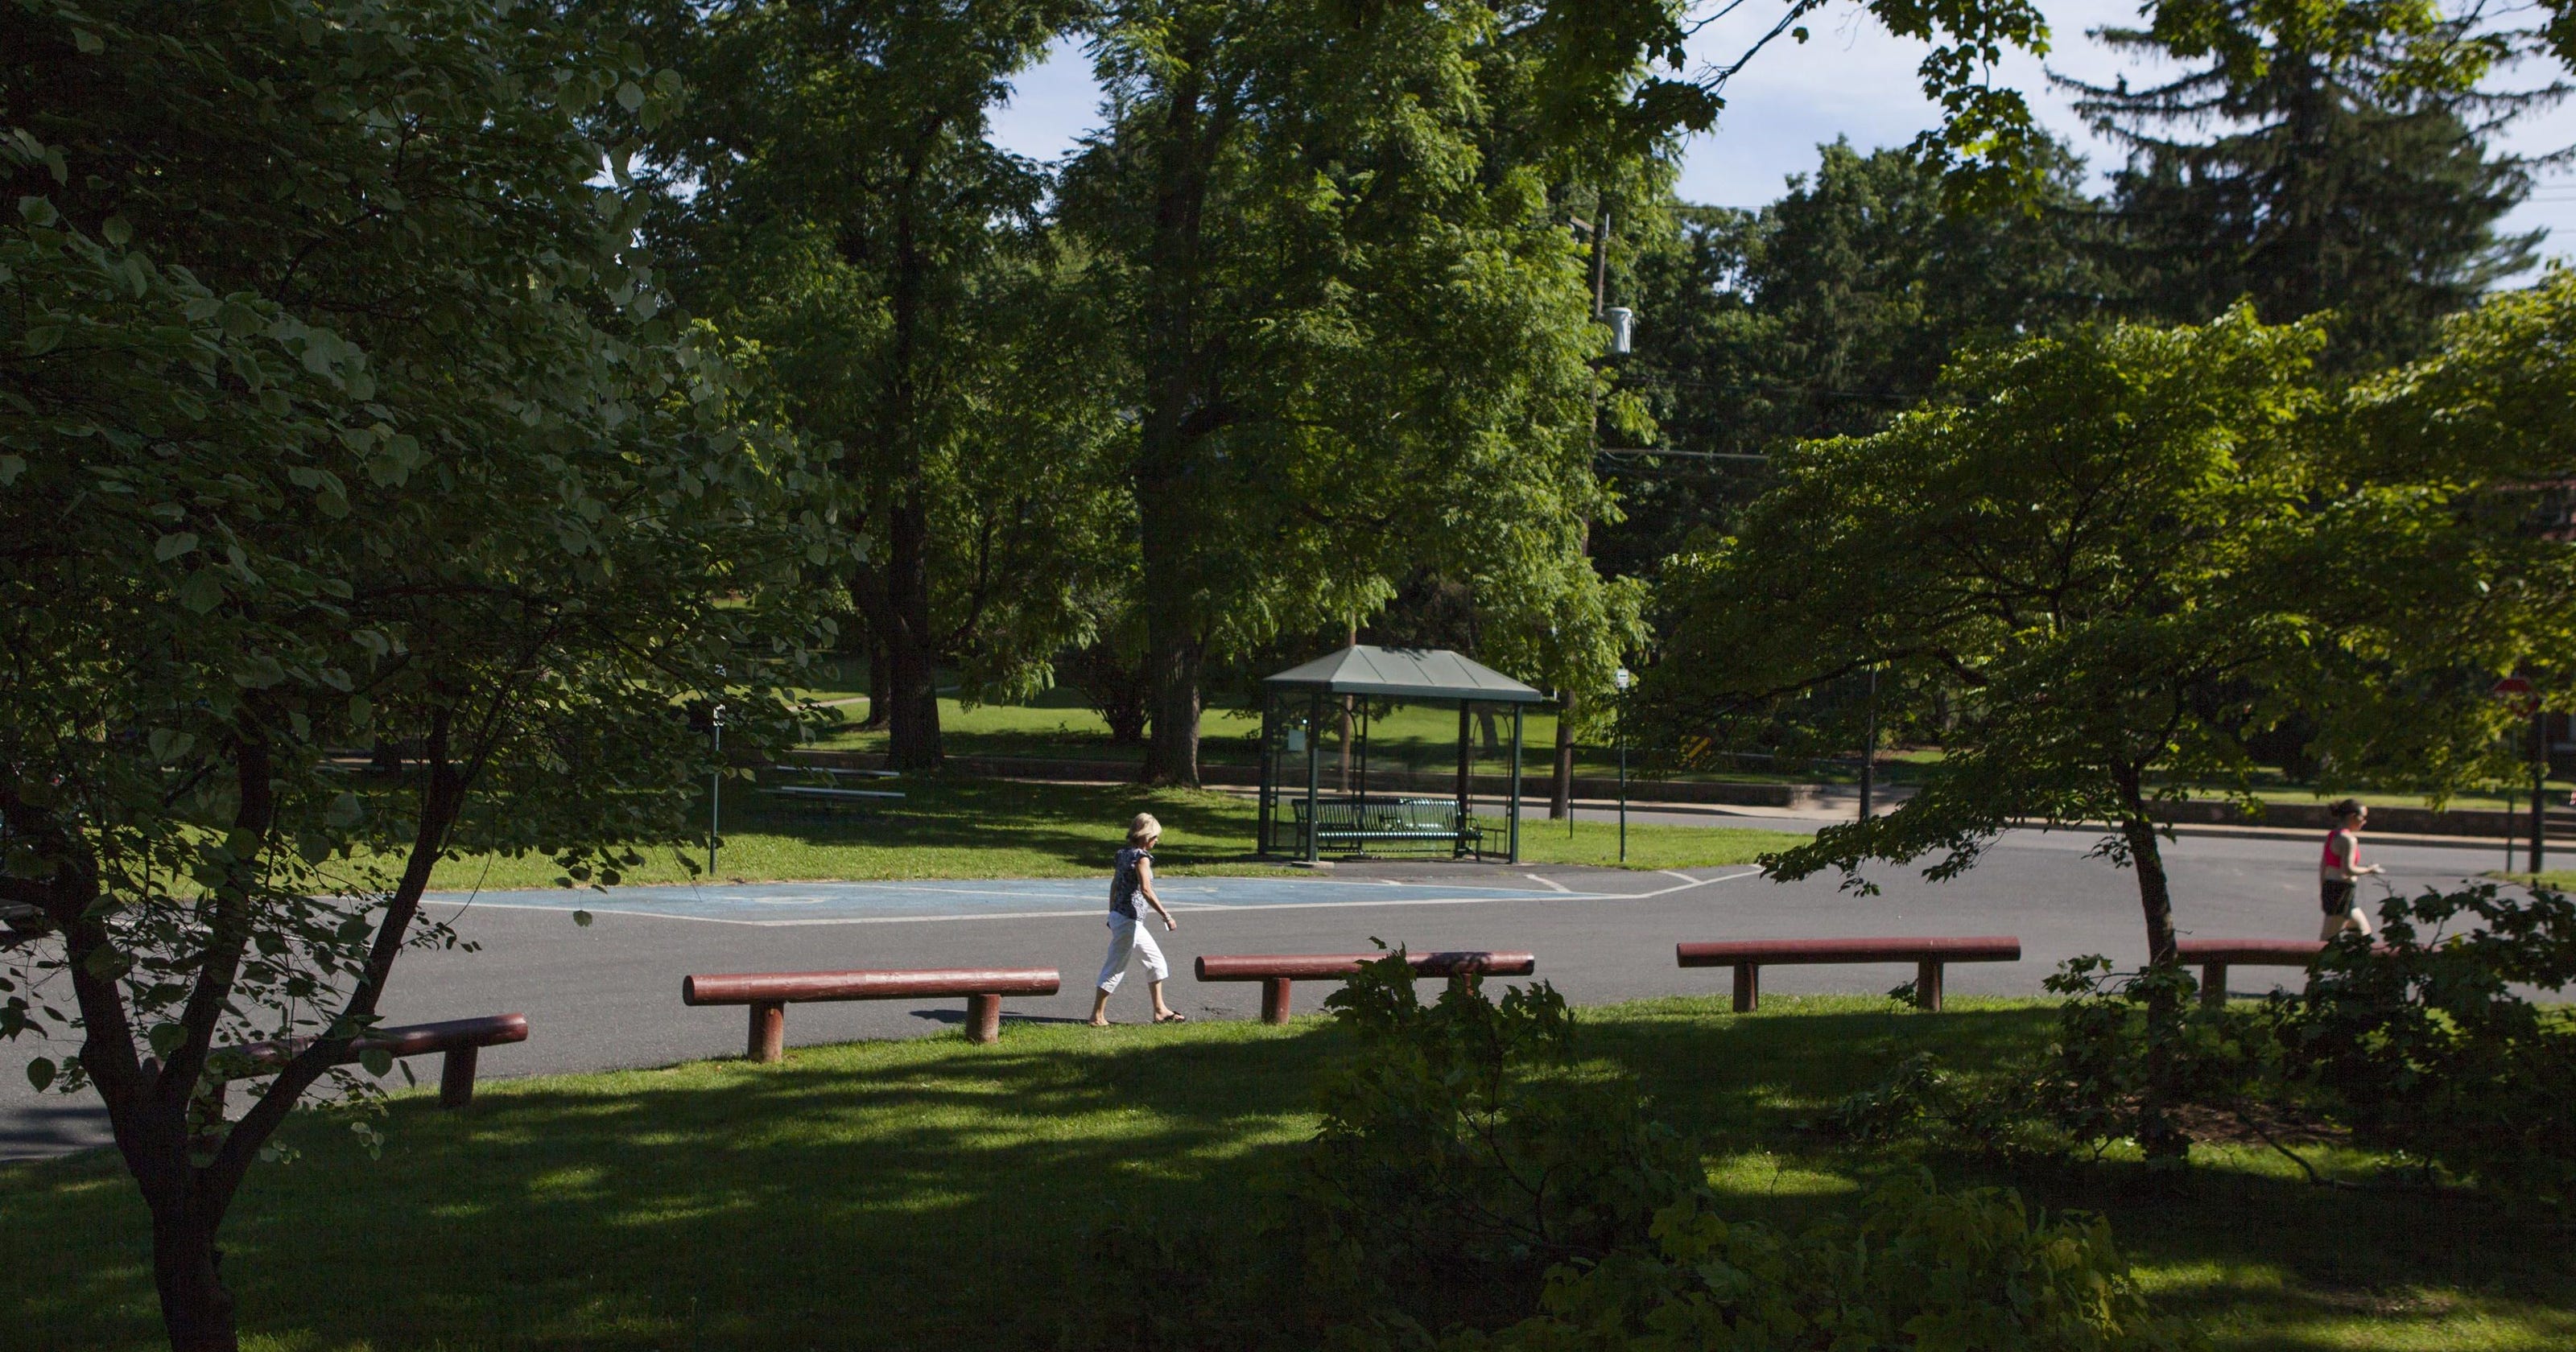 Gypsy Hill Park in Staunton, Virginia Has Something for Everyone